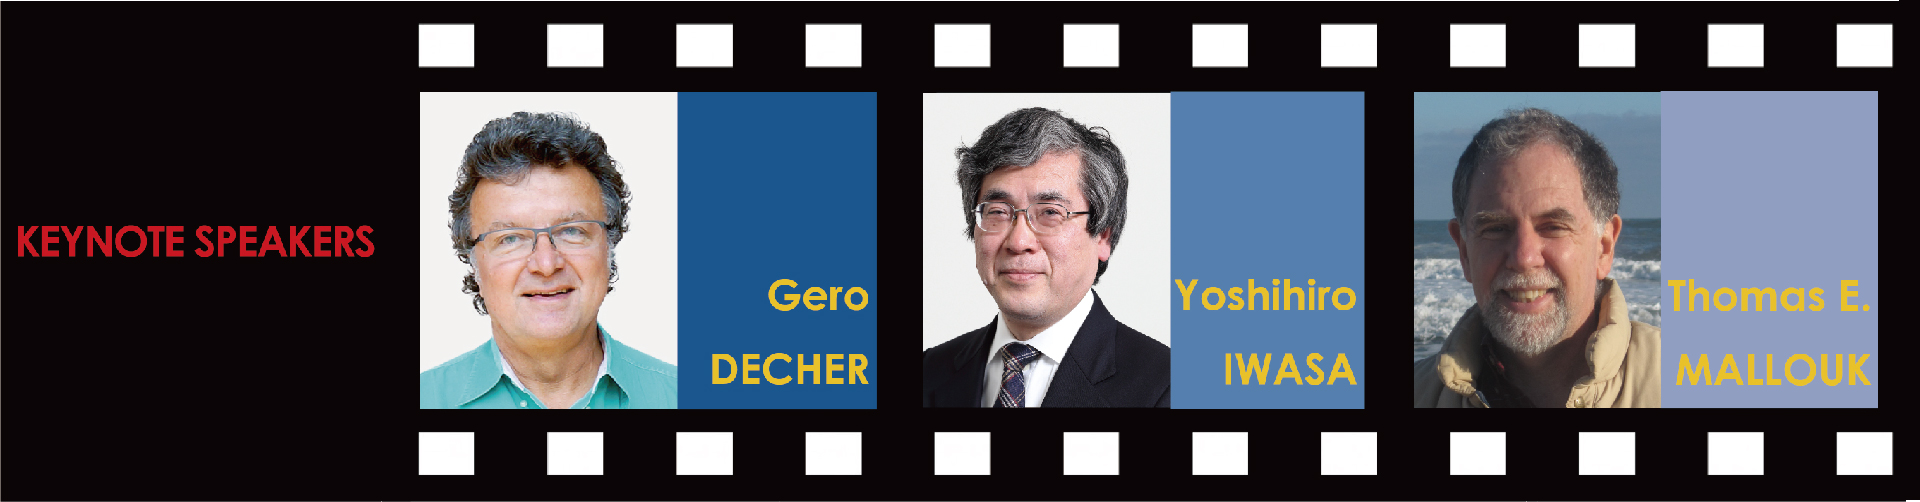 Keynote Speakers: Yoshihiro Iwasa, Thomas E. Mallouk and Gero Decher